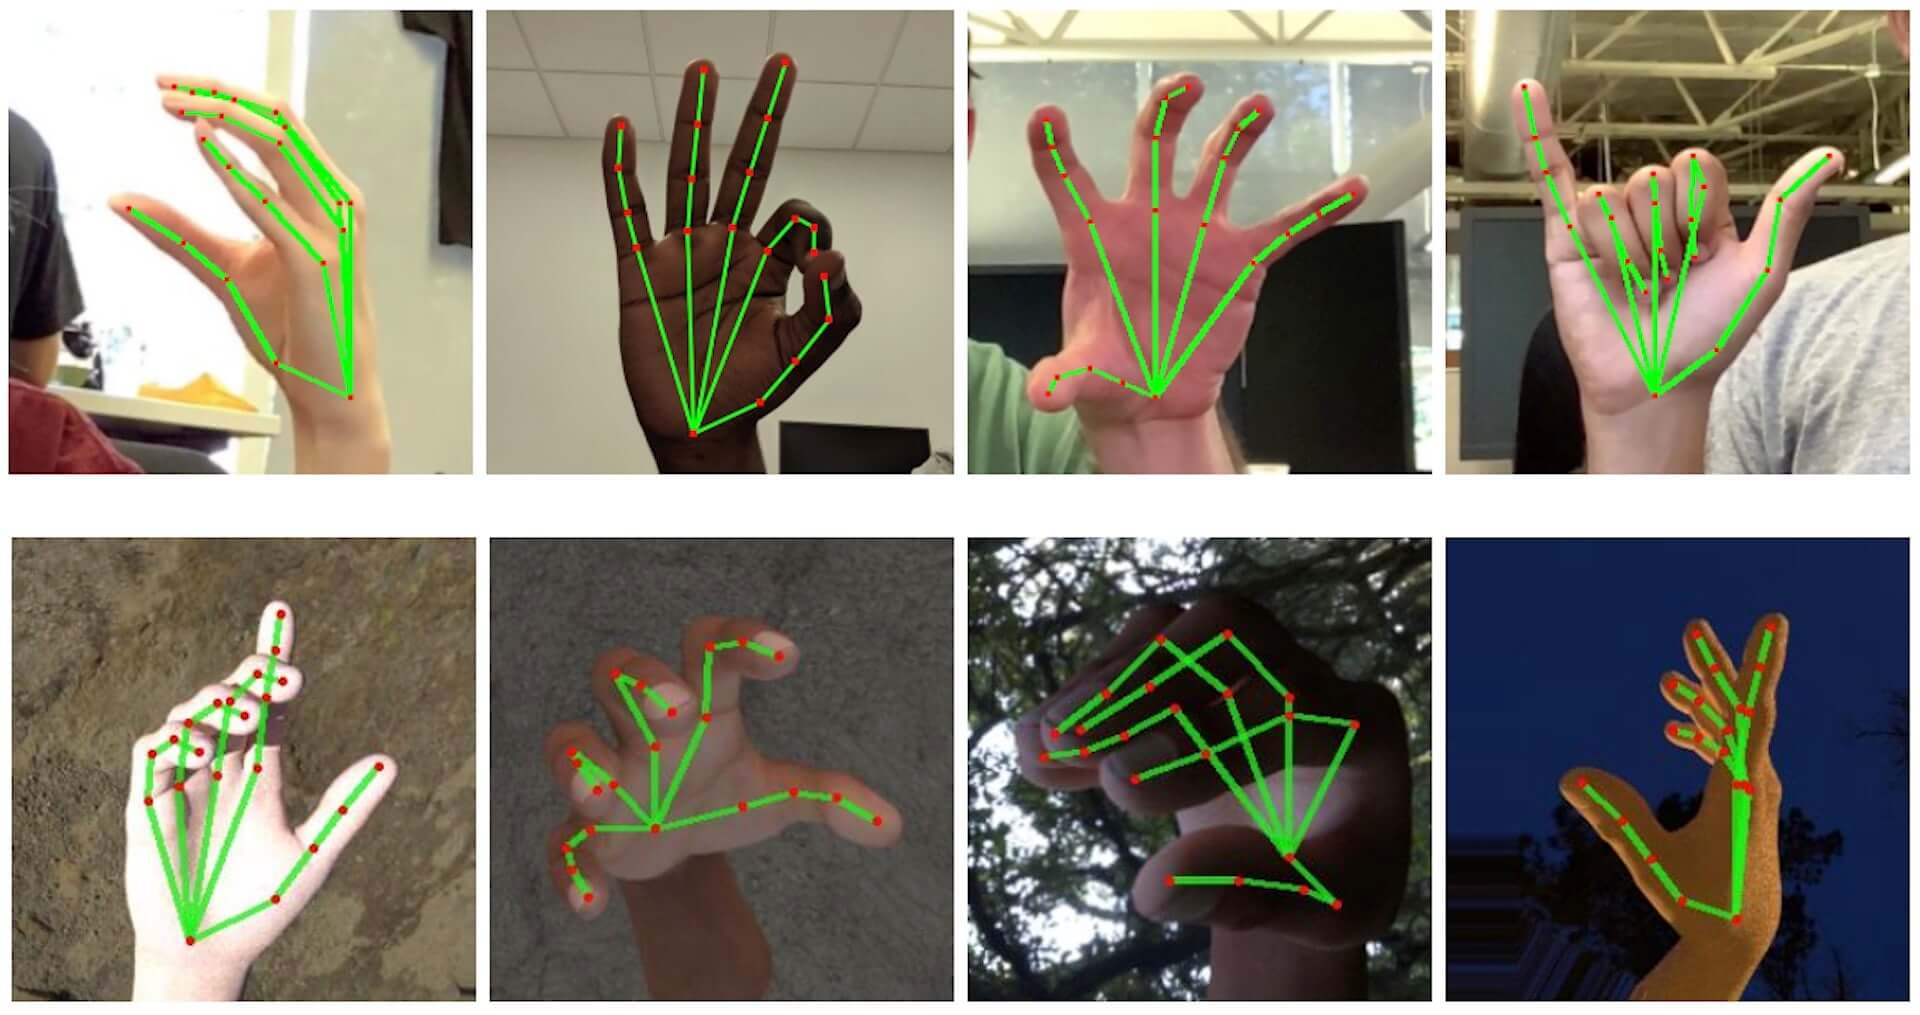 Google AI搭載のスマホを利用すれば、手話が簡単に理解できるようになる？ tech190820_googleai_handsign_1-1920x1015